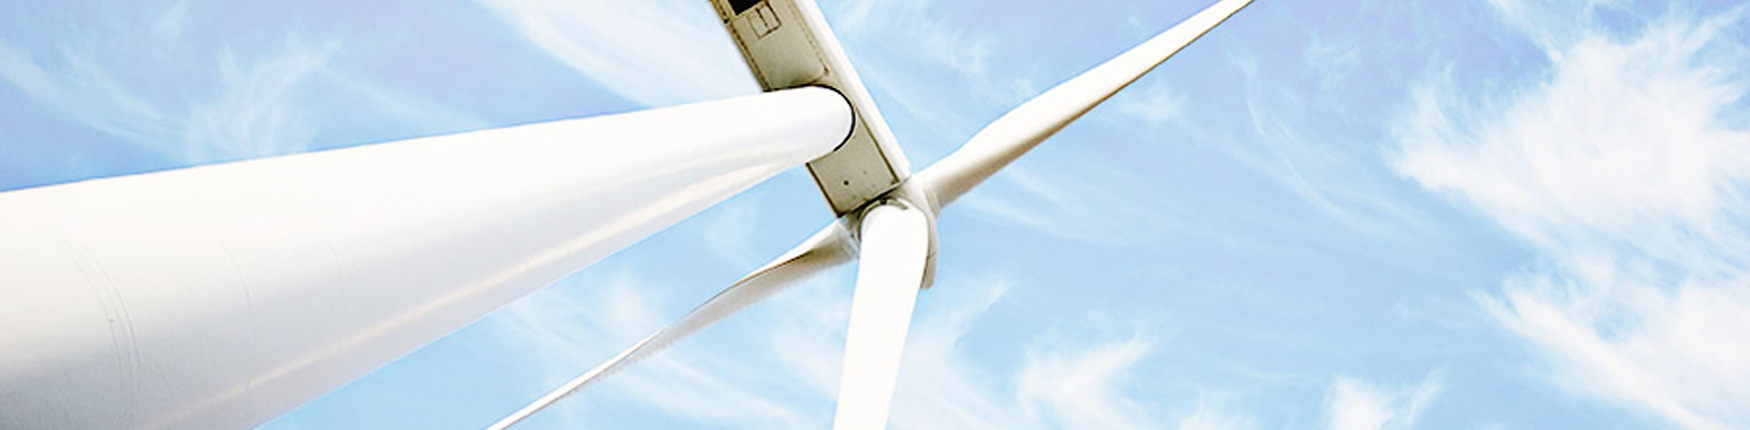 wind turbine slider image